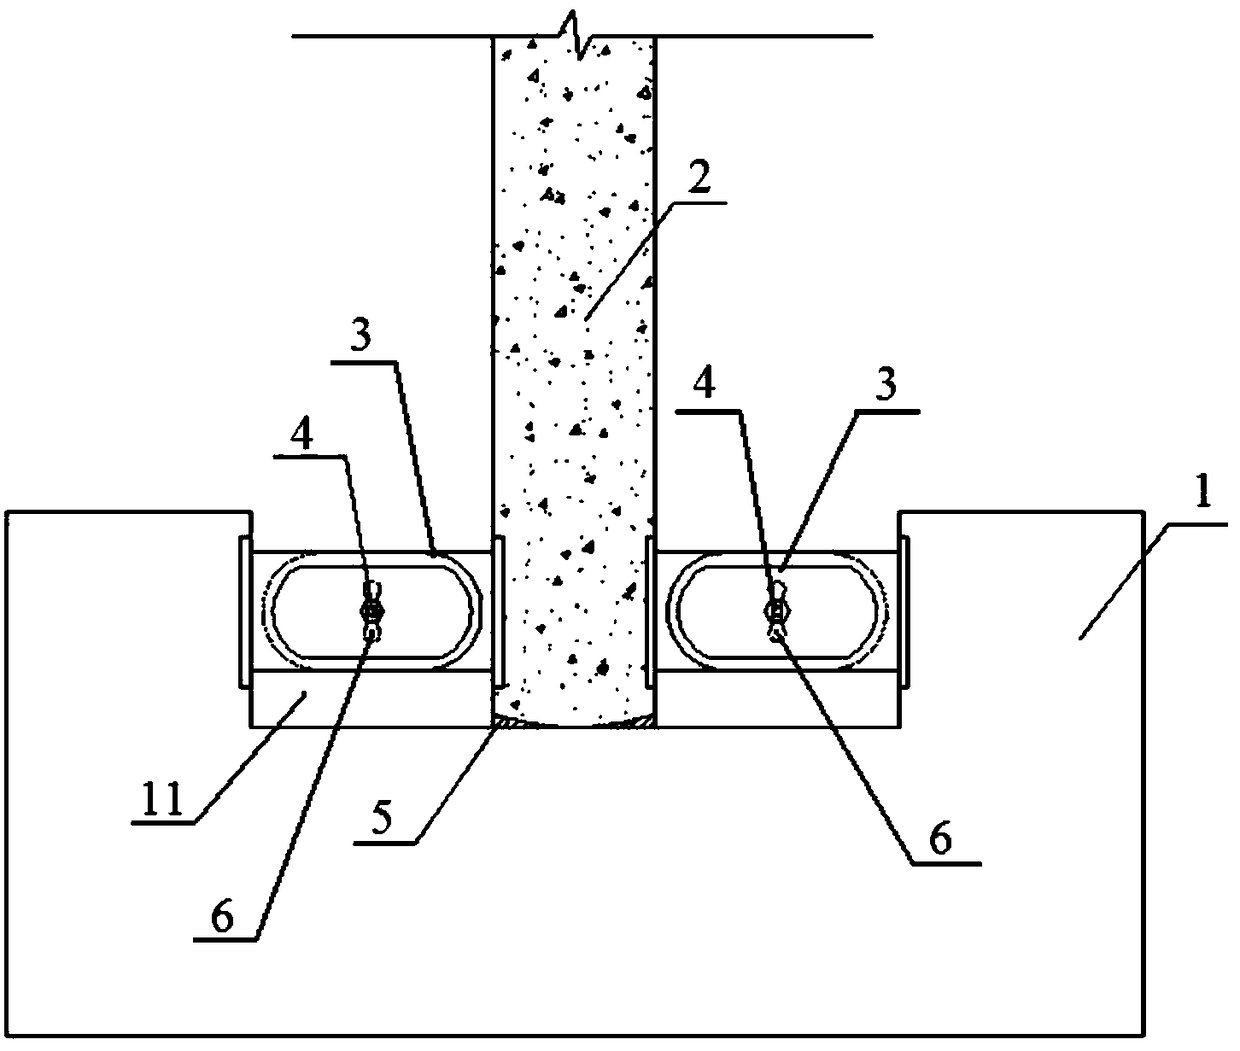 A swinging energy-dissipating column base